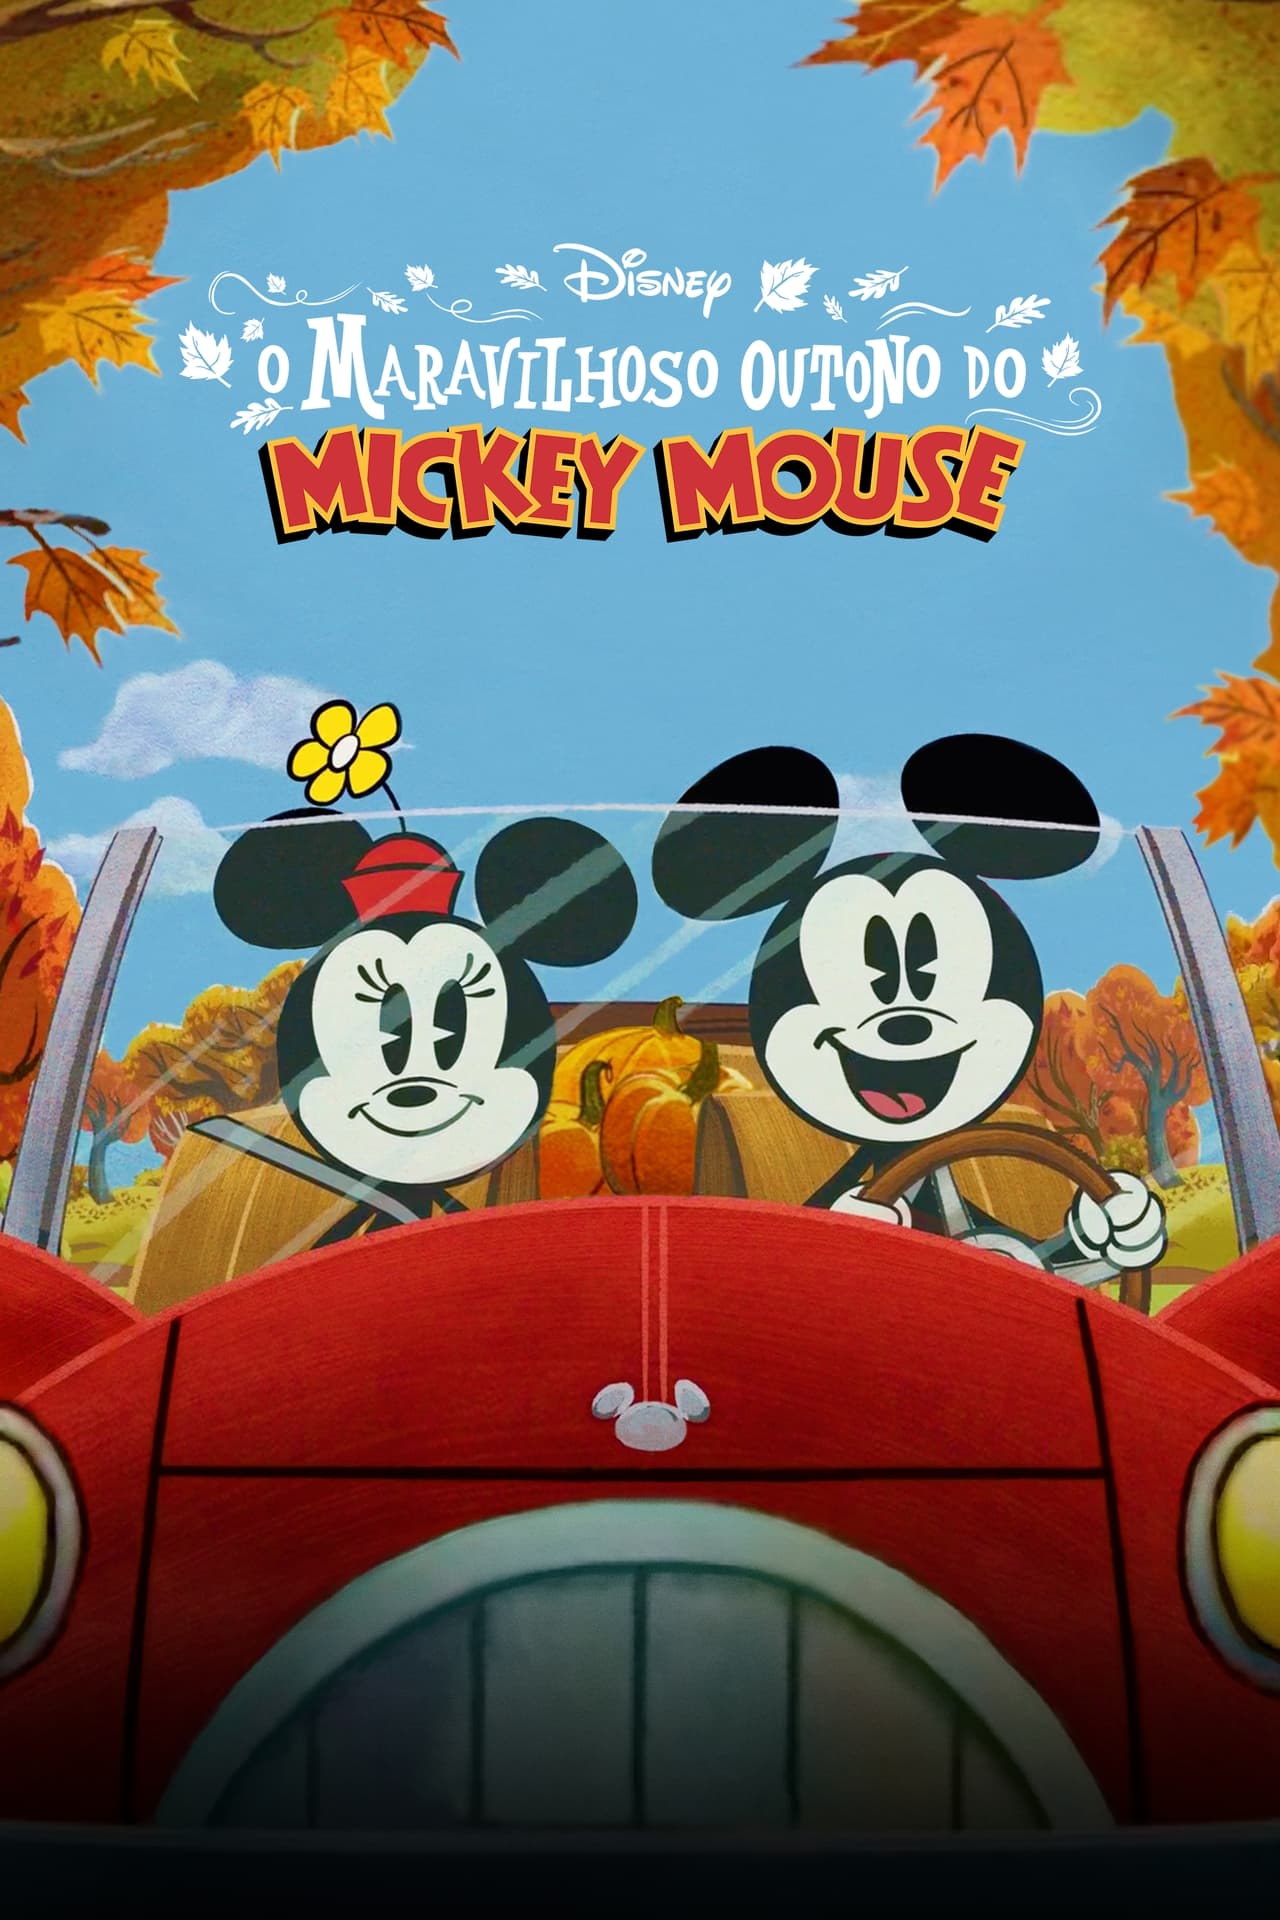 O Maravilhoso Outono do Mickey Mouse Dublado Online